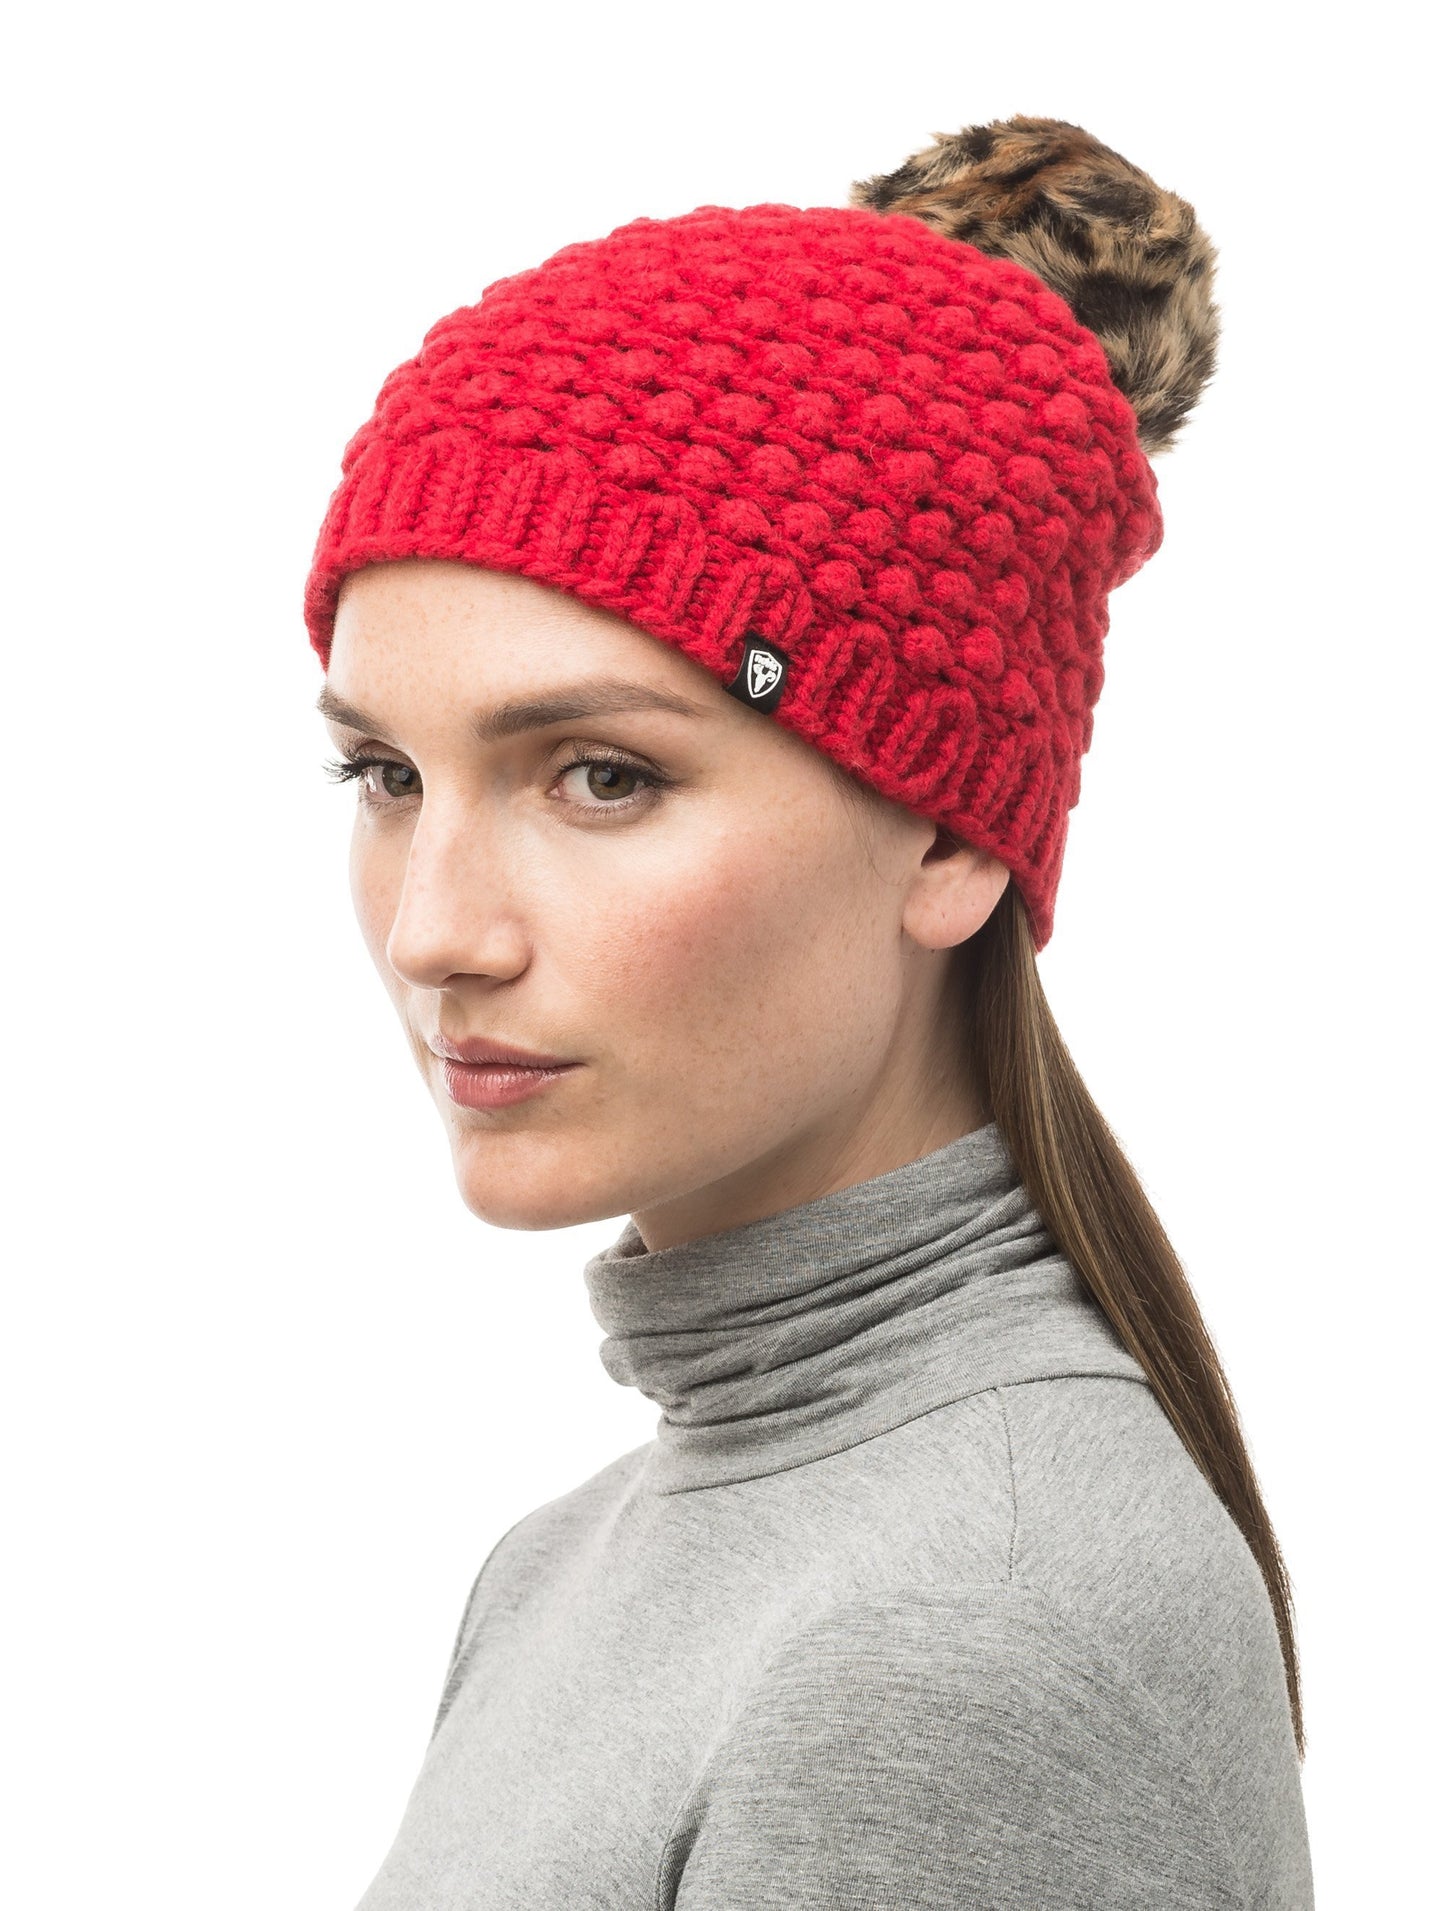 Red bulk knit toque with faux fur pom pom on top